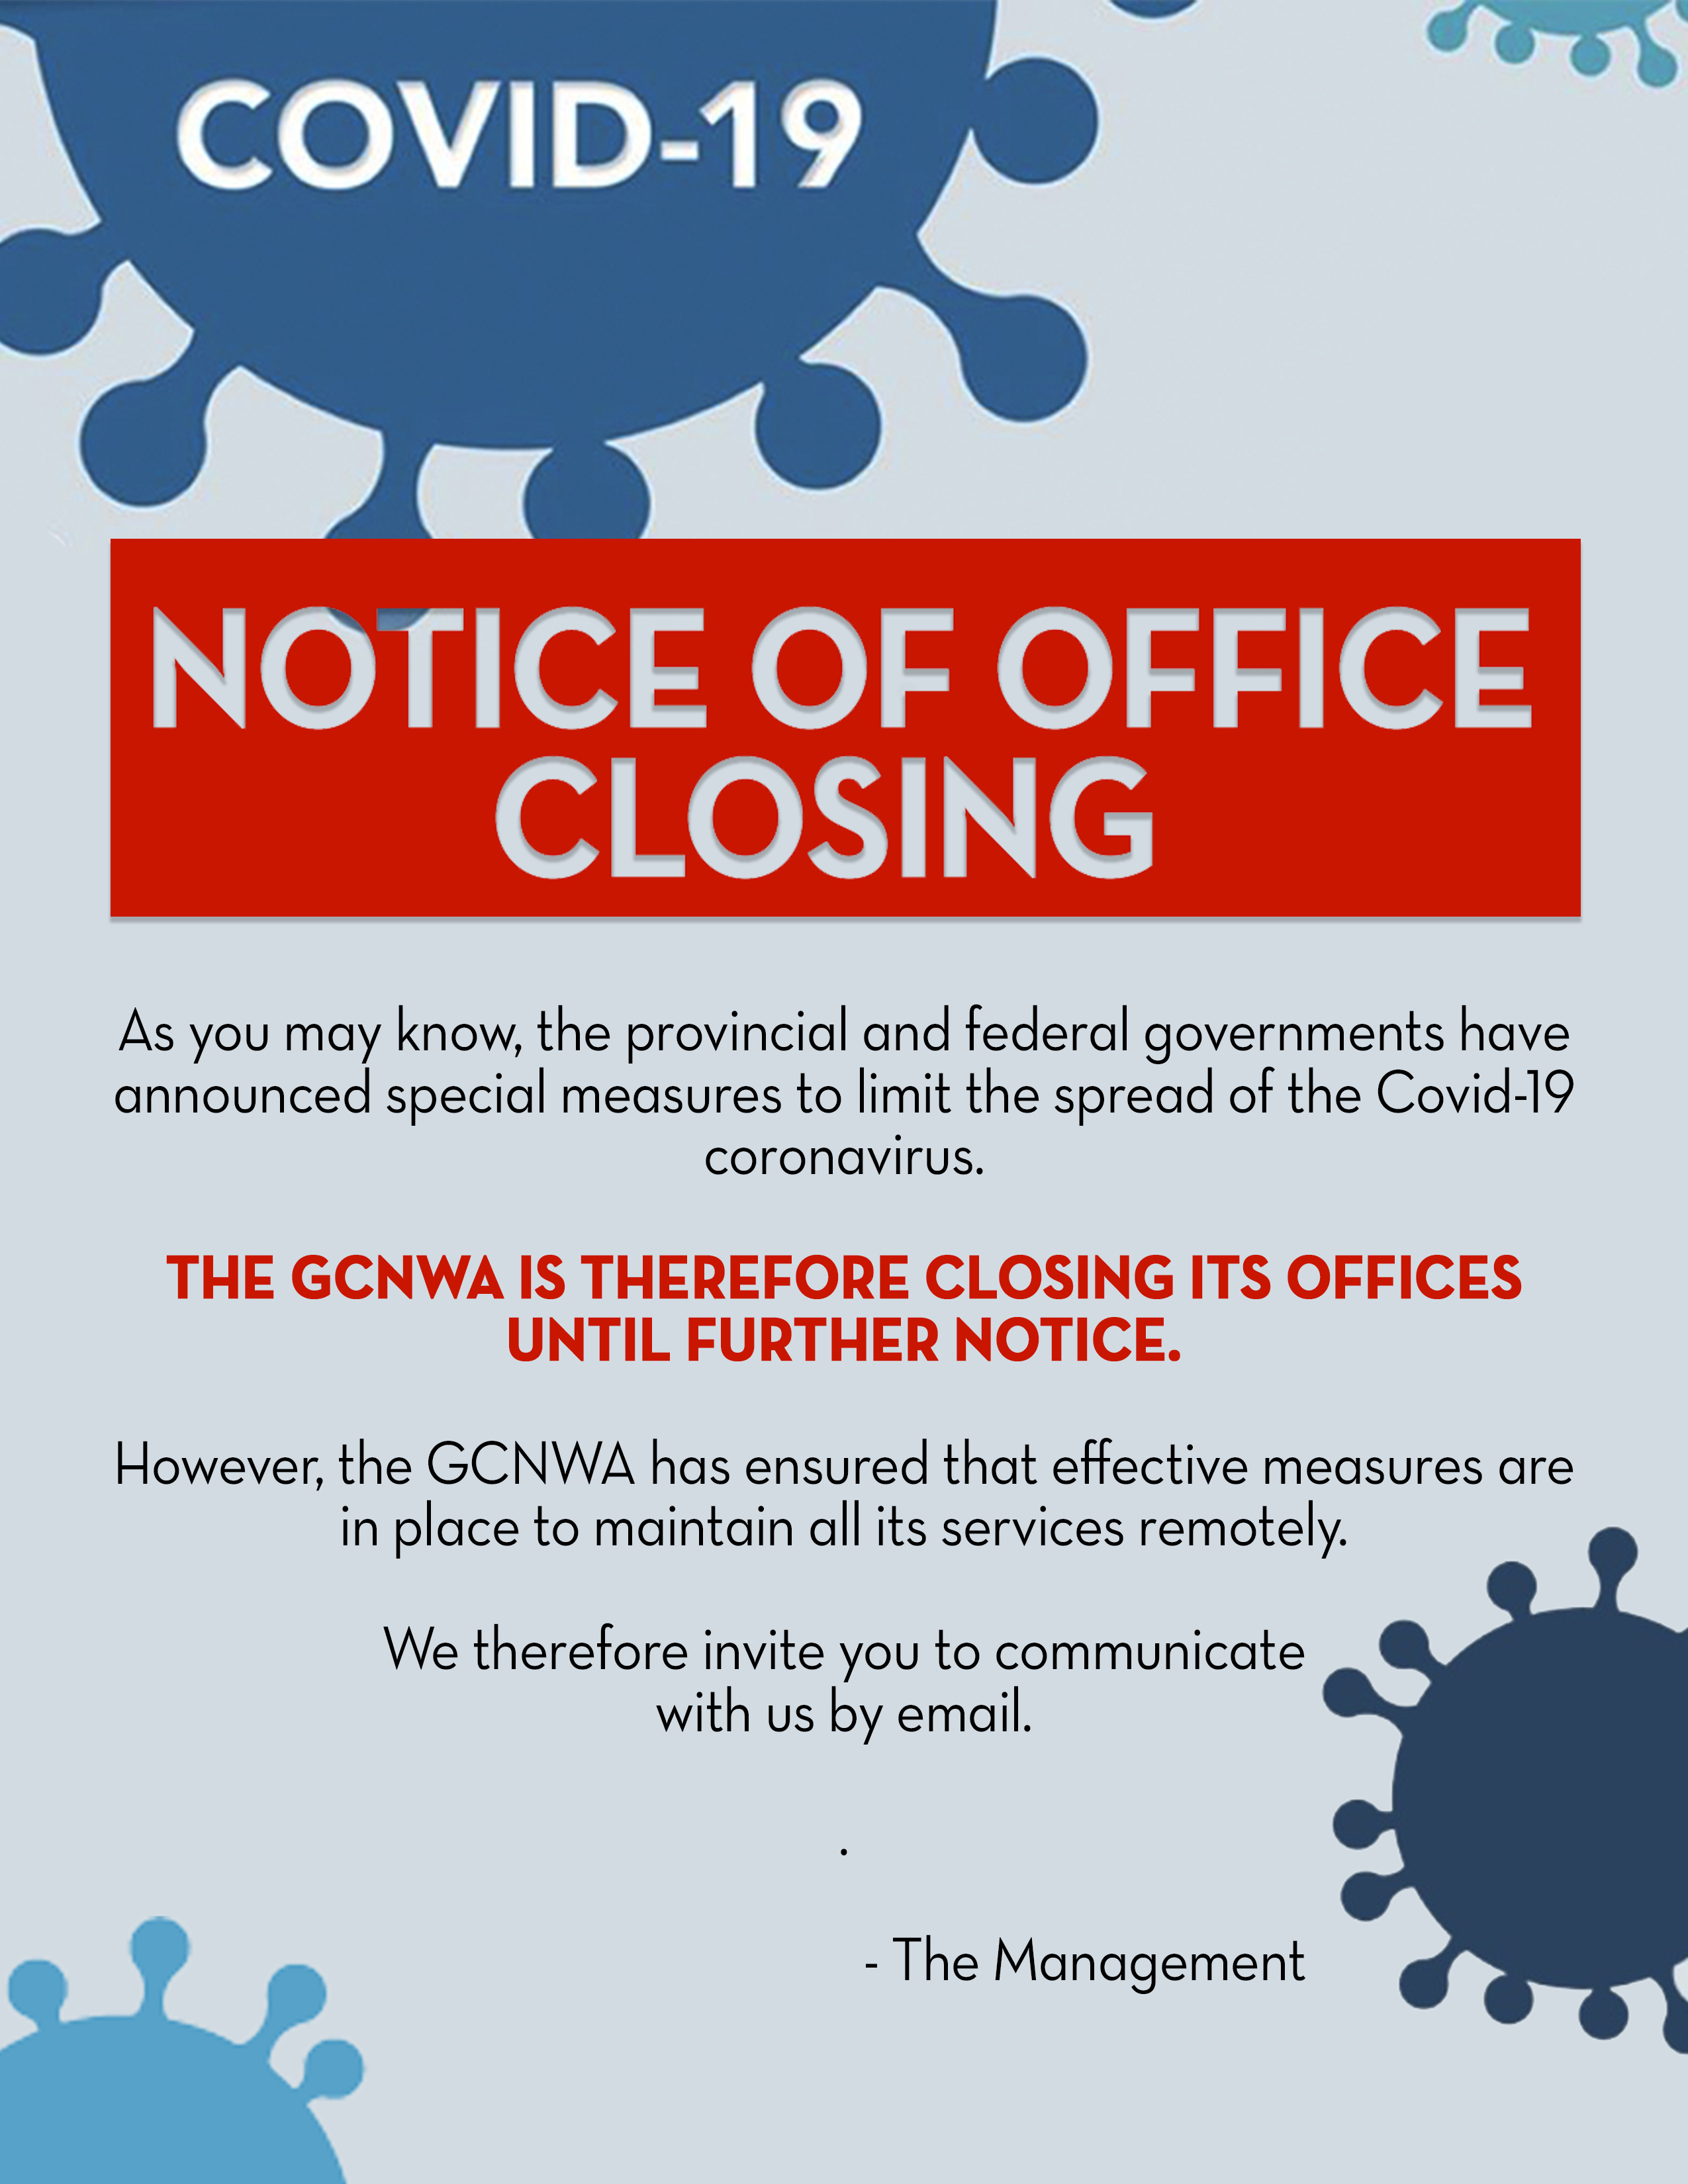 NOTICE OF OFFICE CLOSING - GCNWA